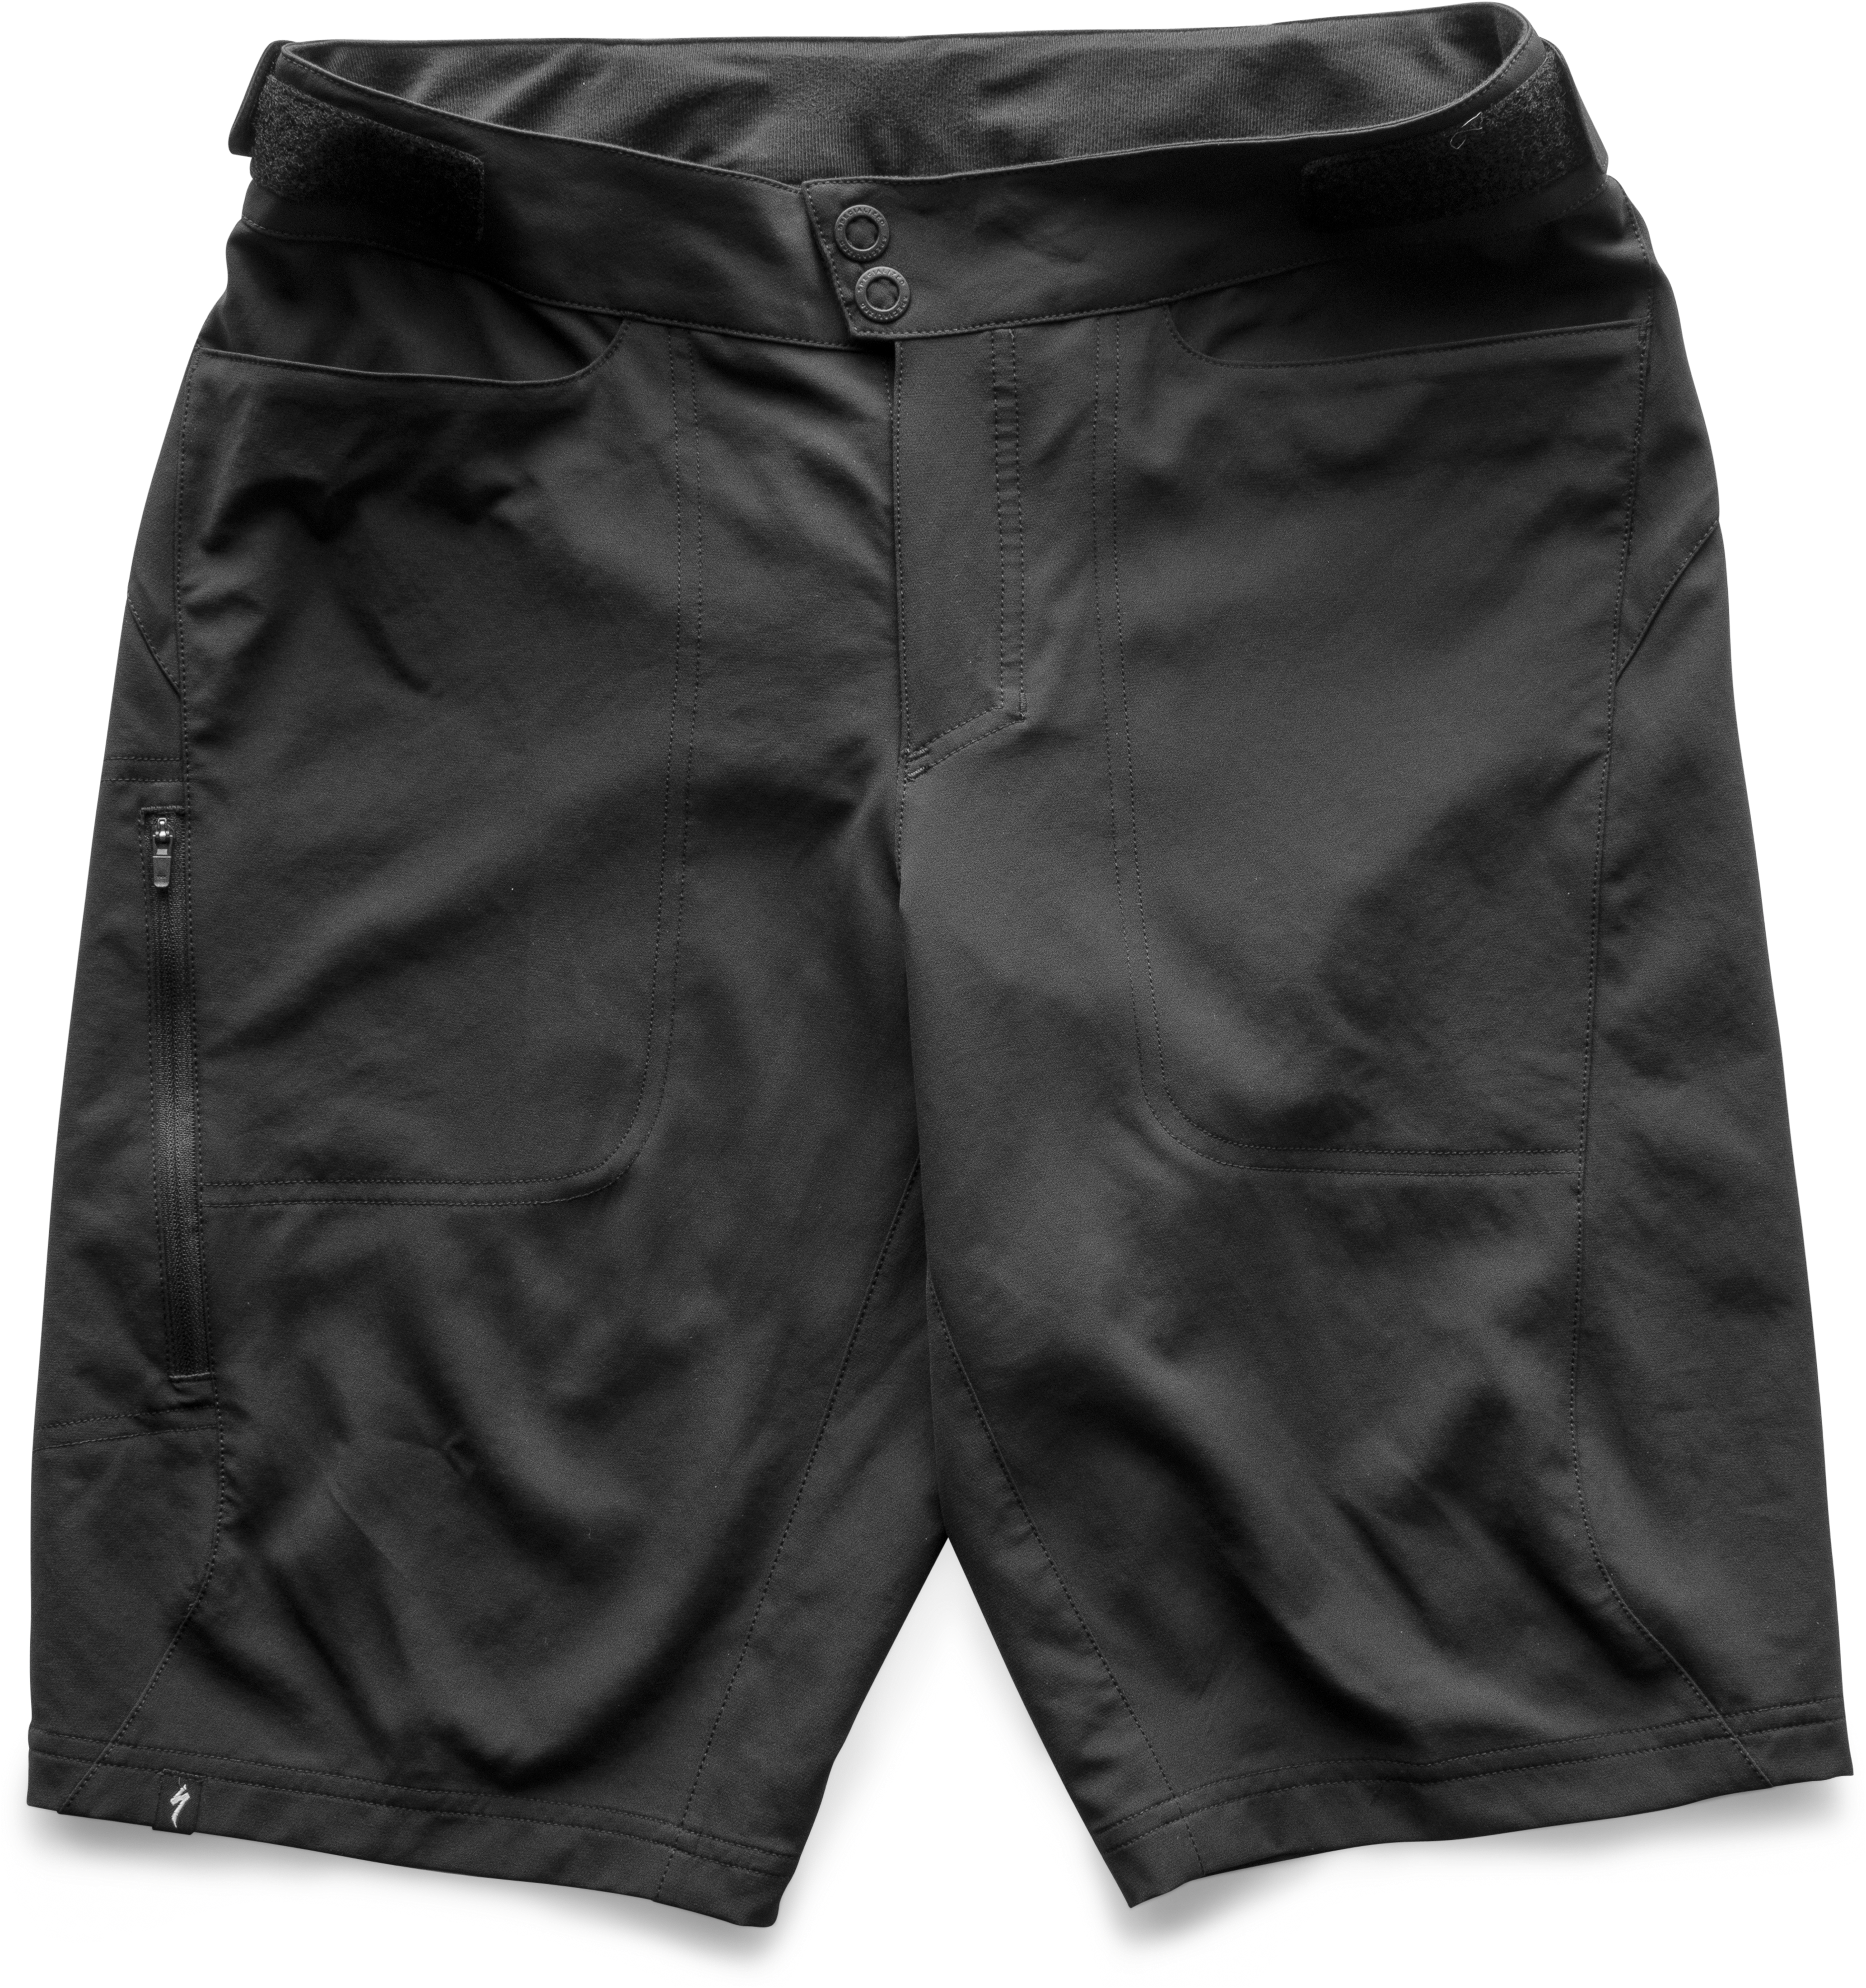 Enduro Sport Shorts